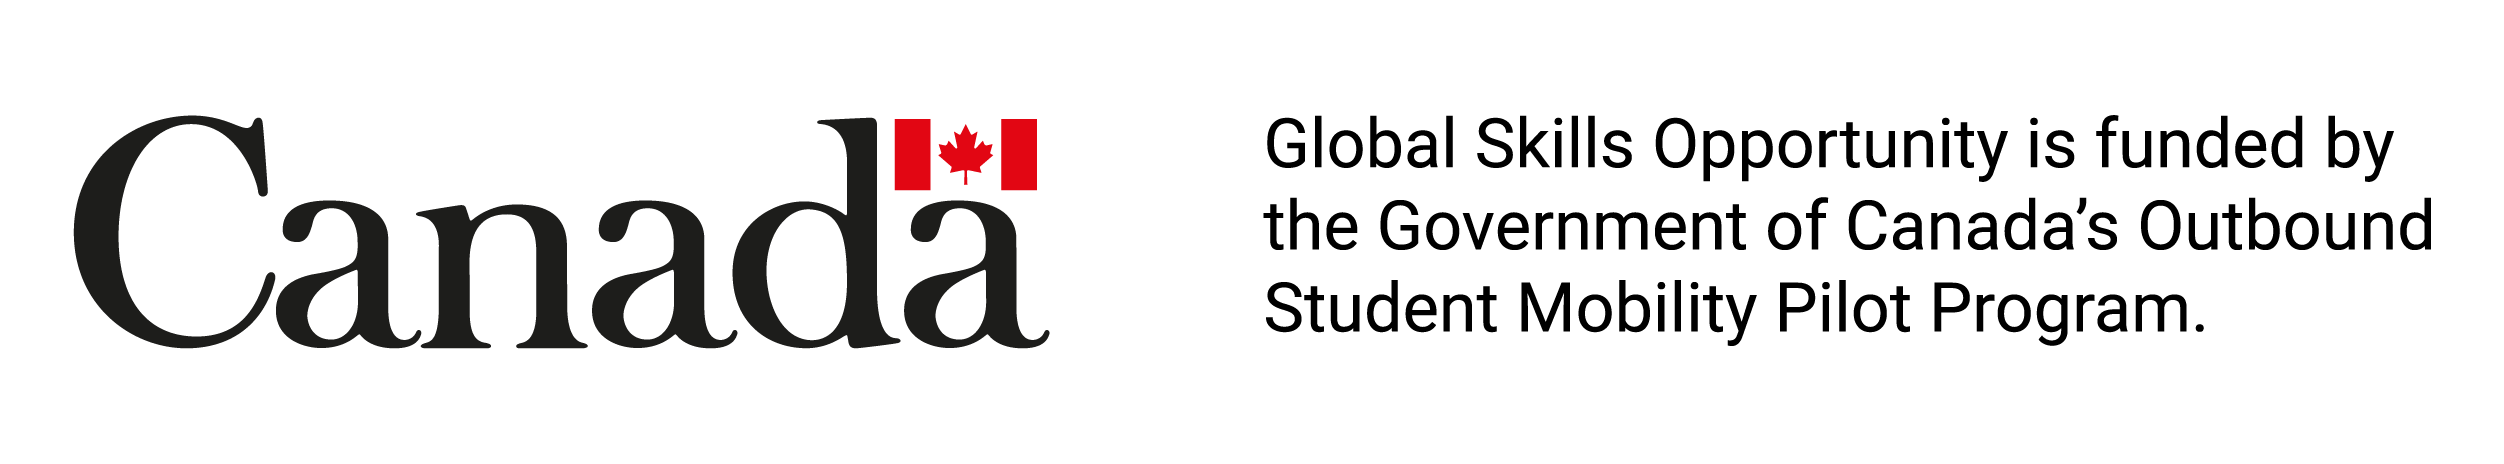 Government of Canada - GSO logo